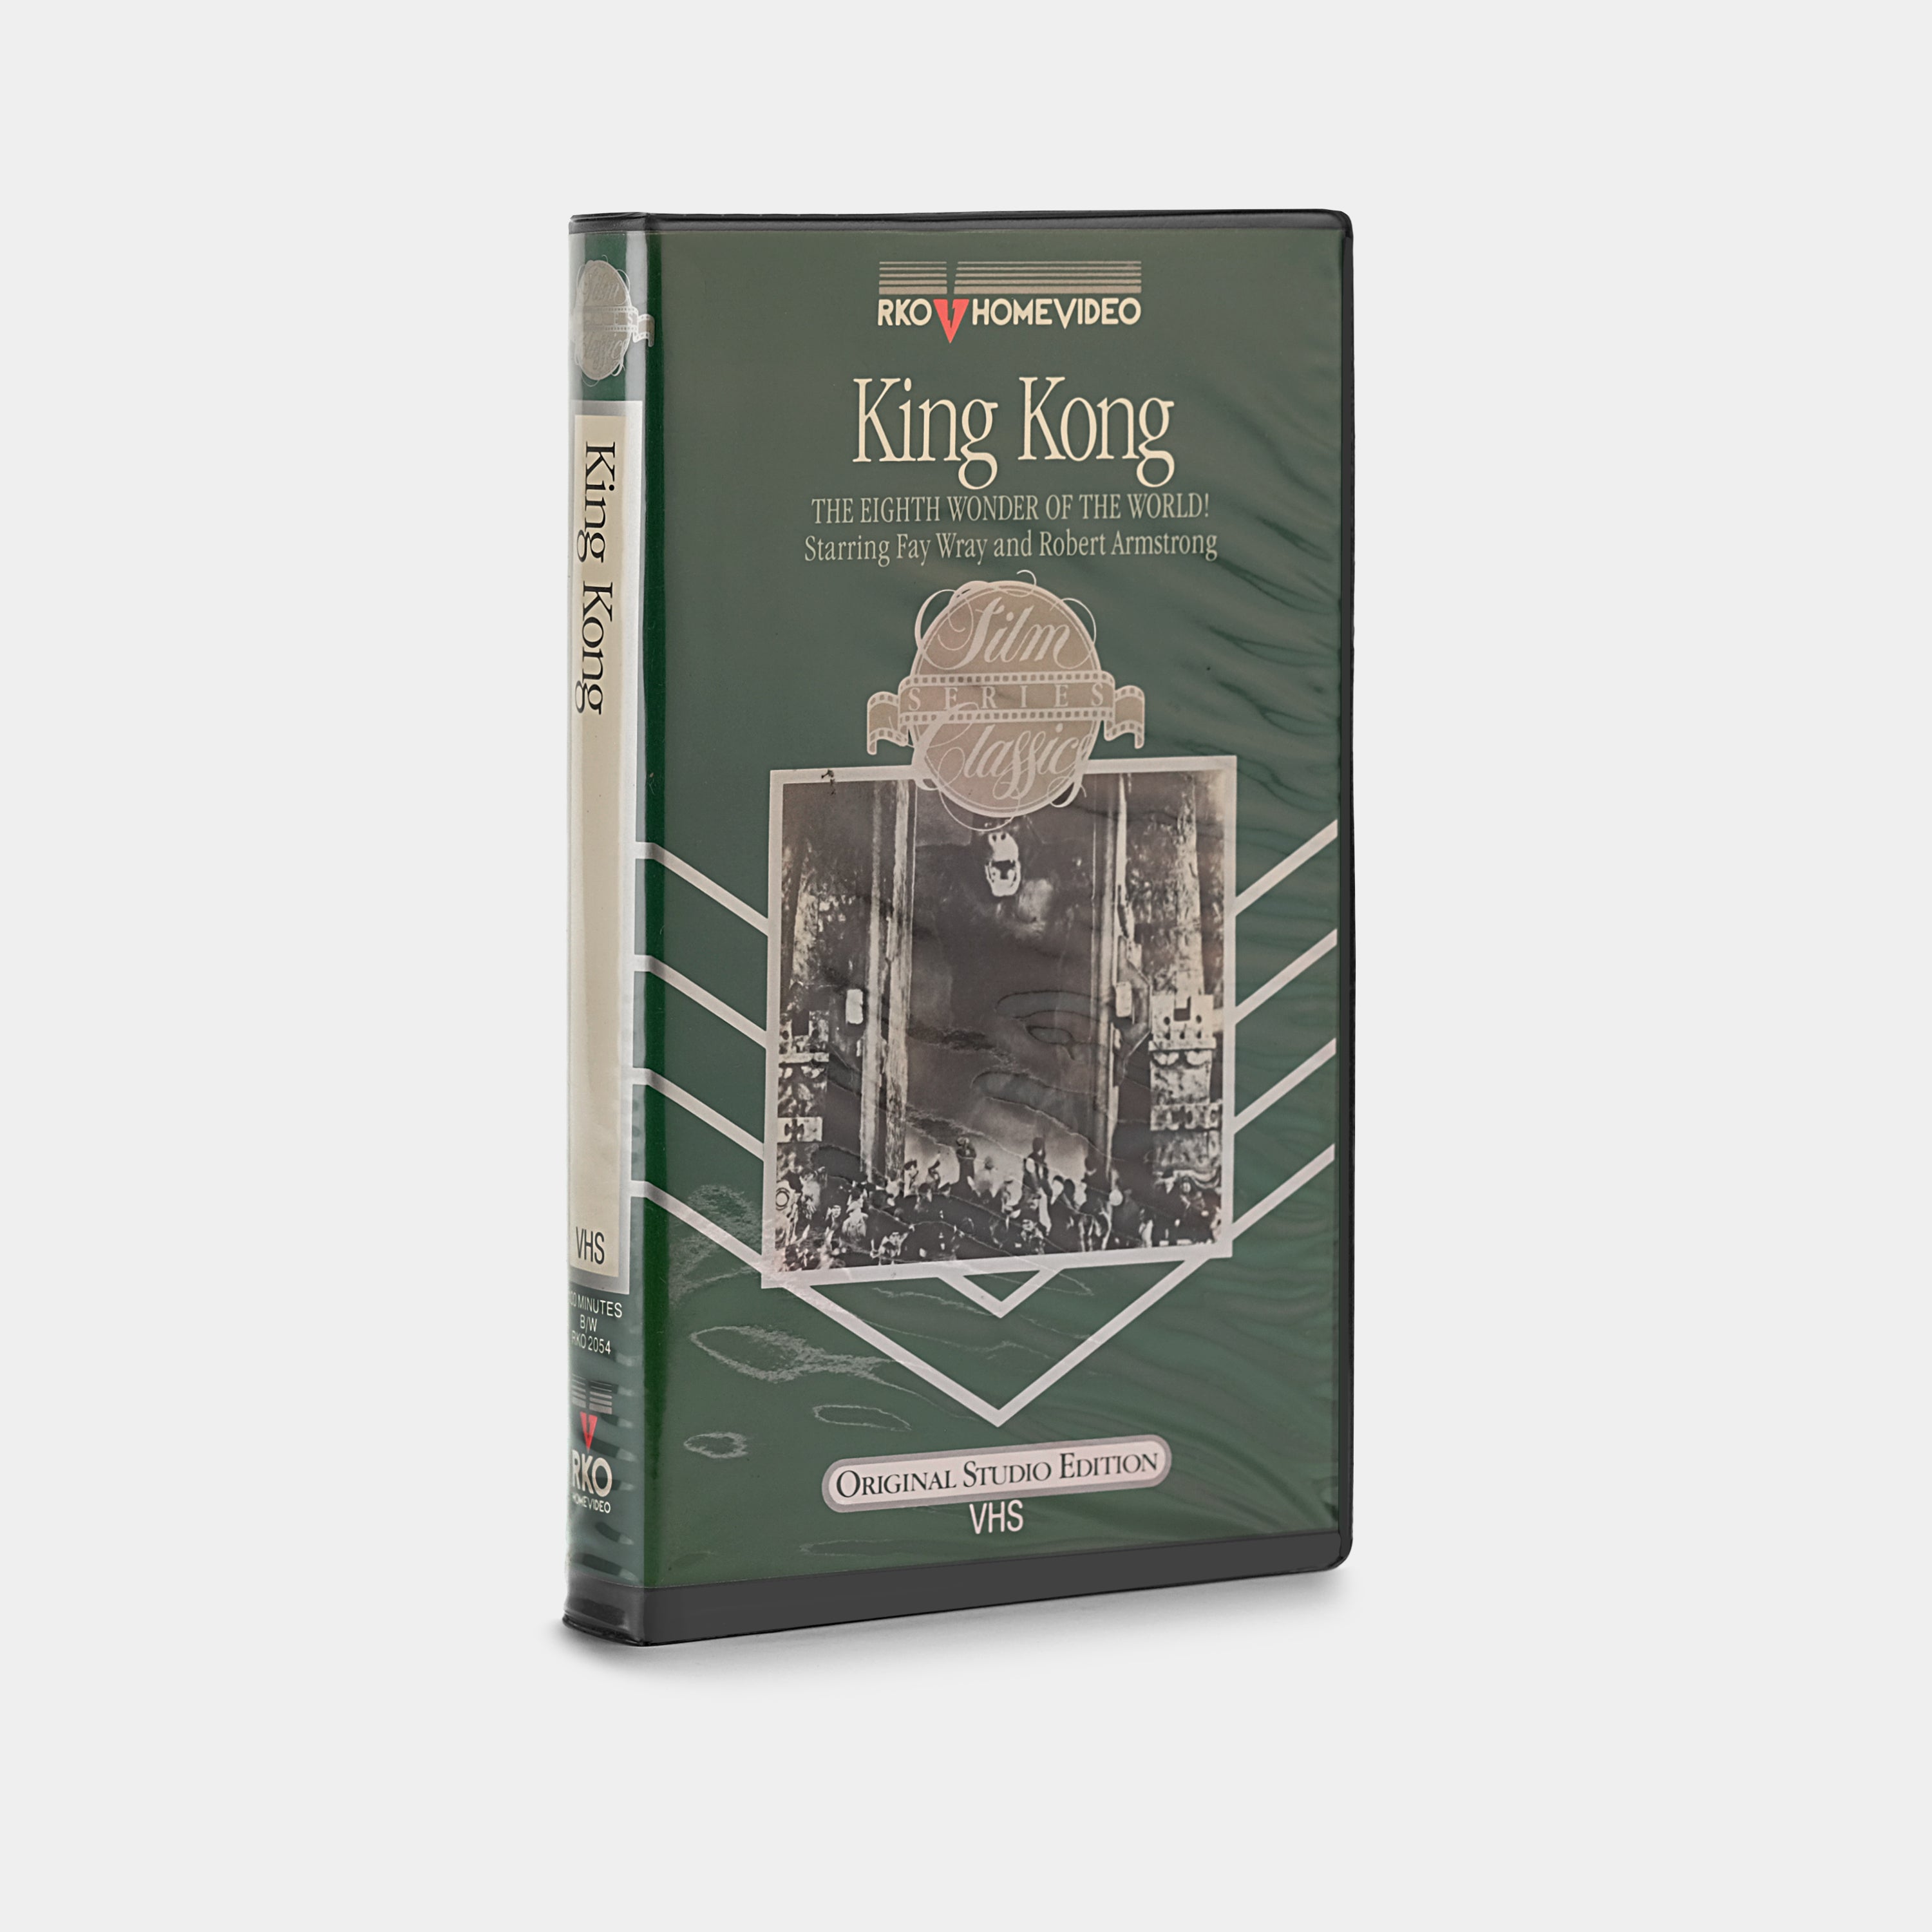 King Kong VHS Tape (Original Studio Edition)